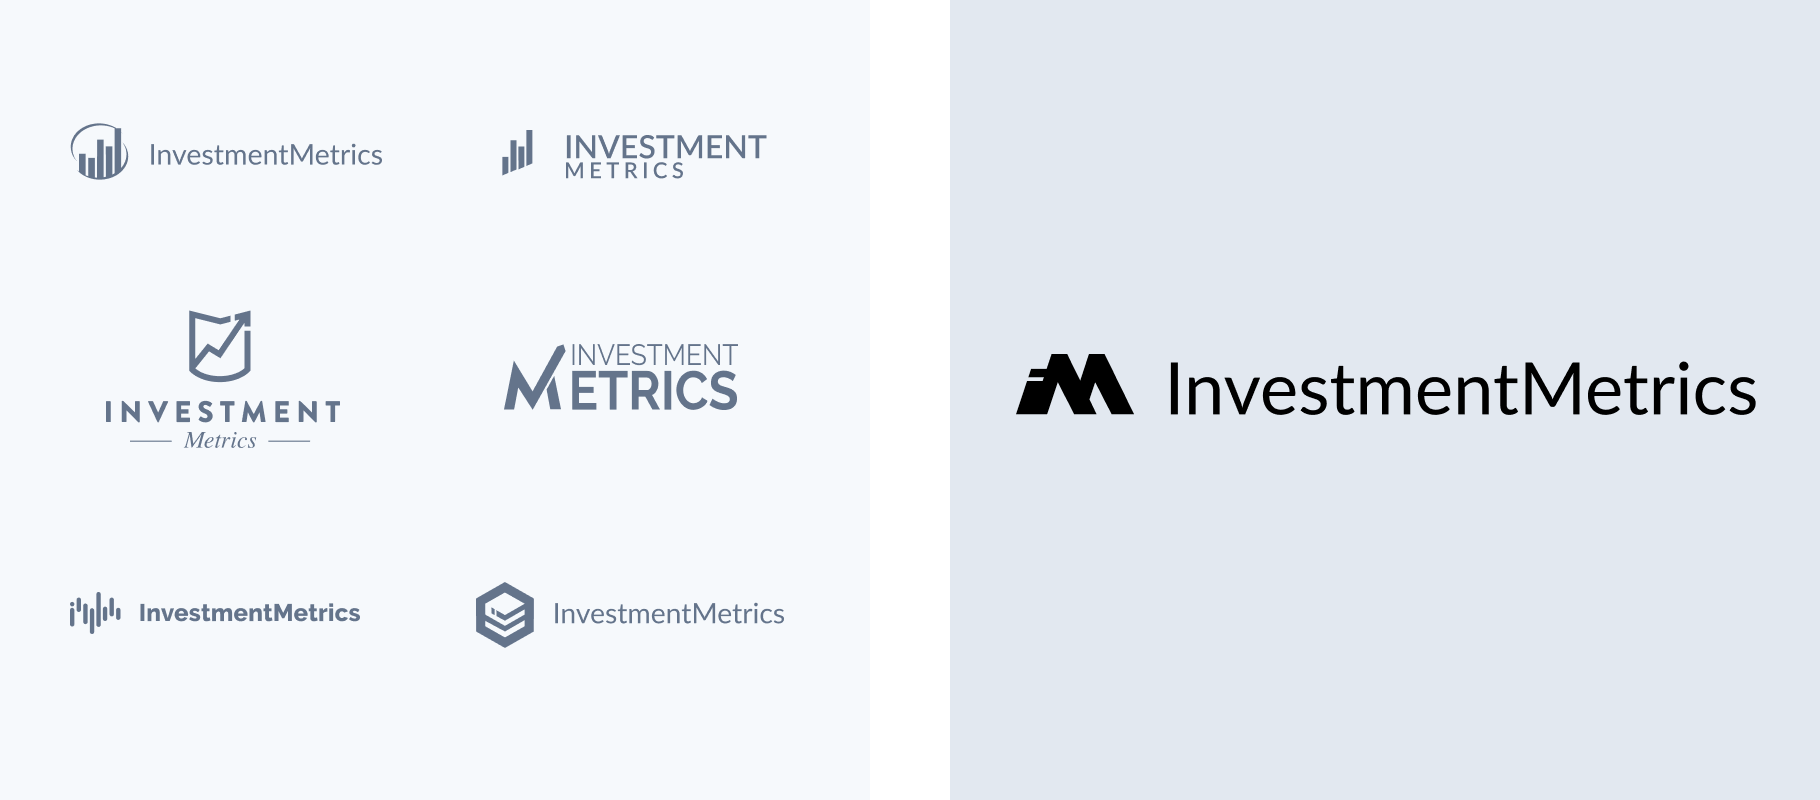 Investment Metrics logo exploration and ideas